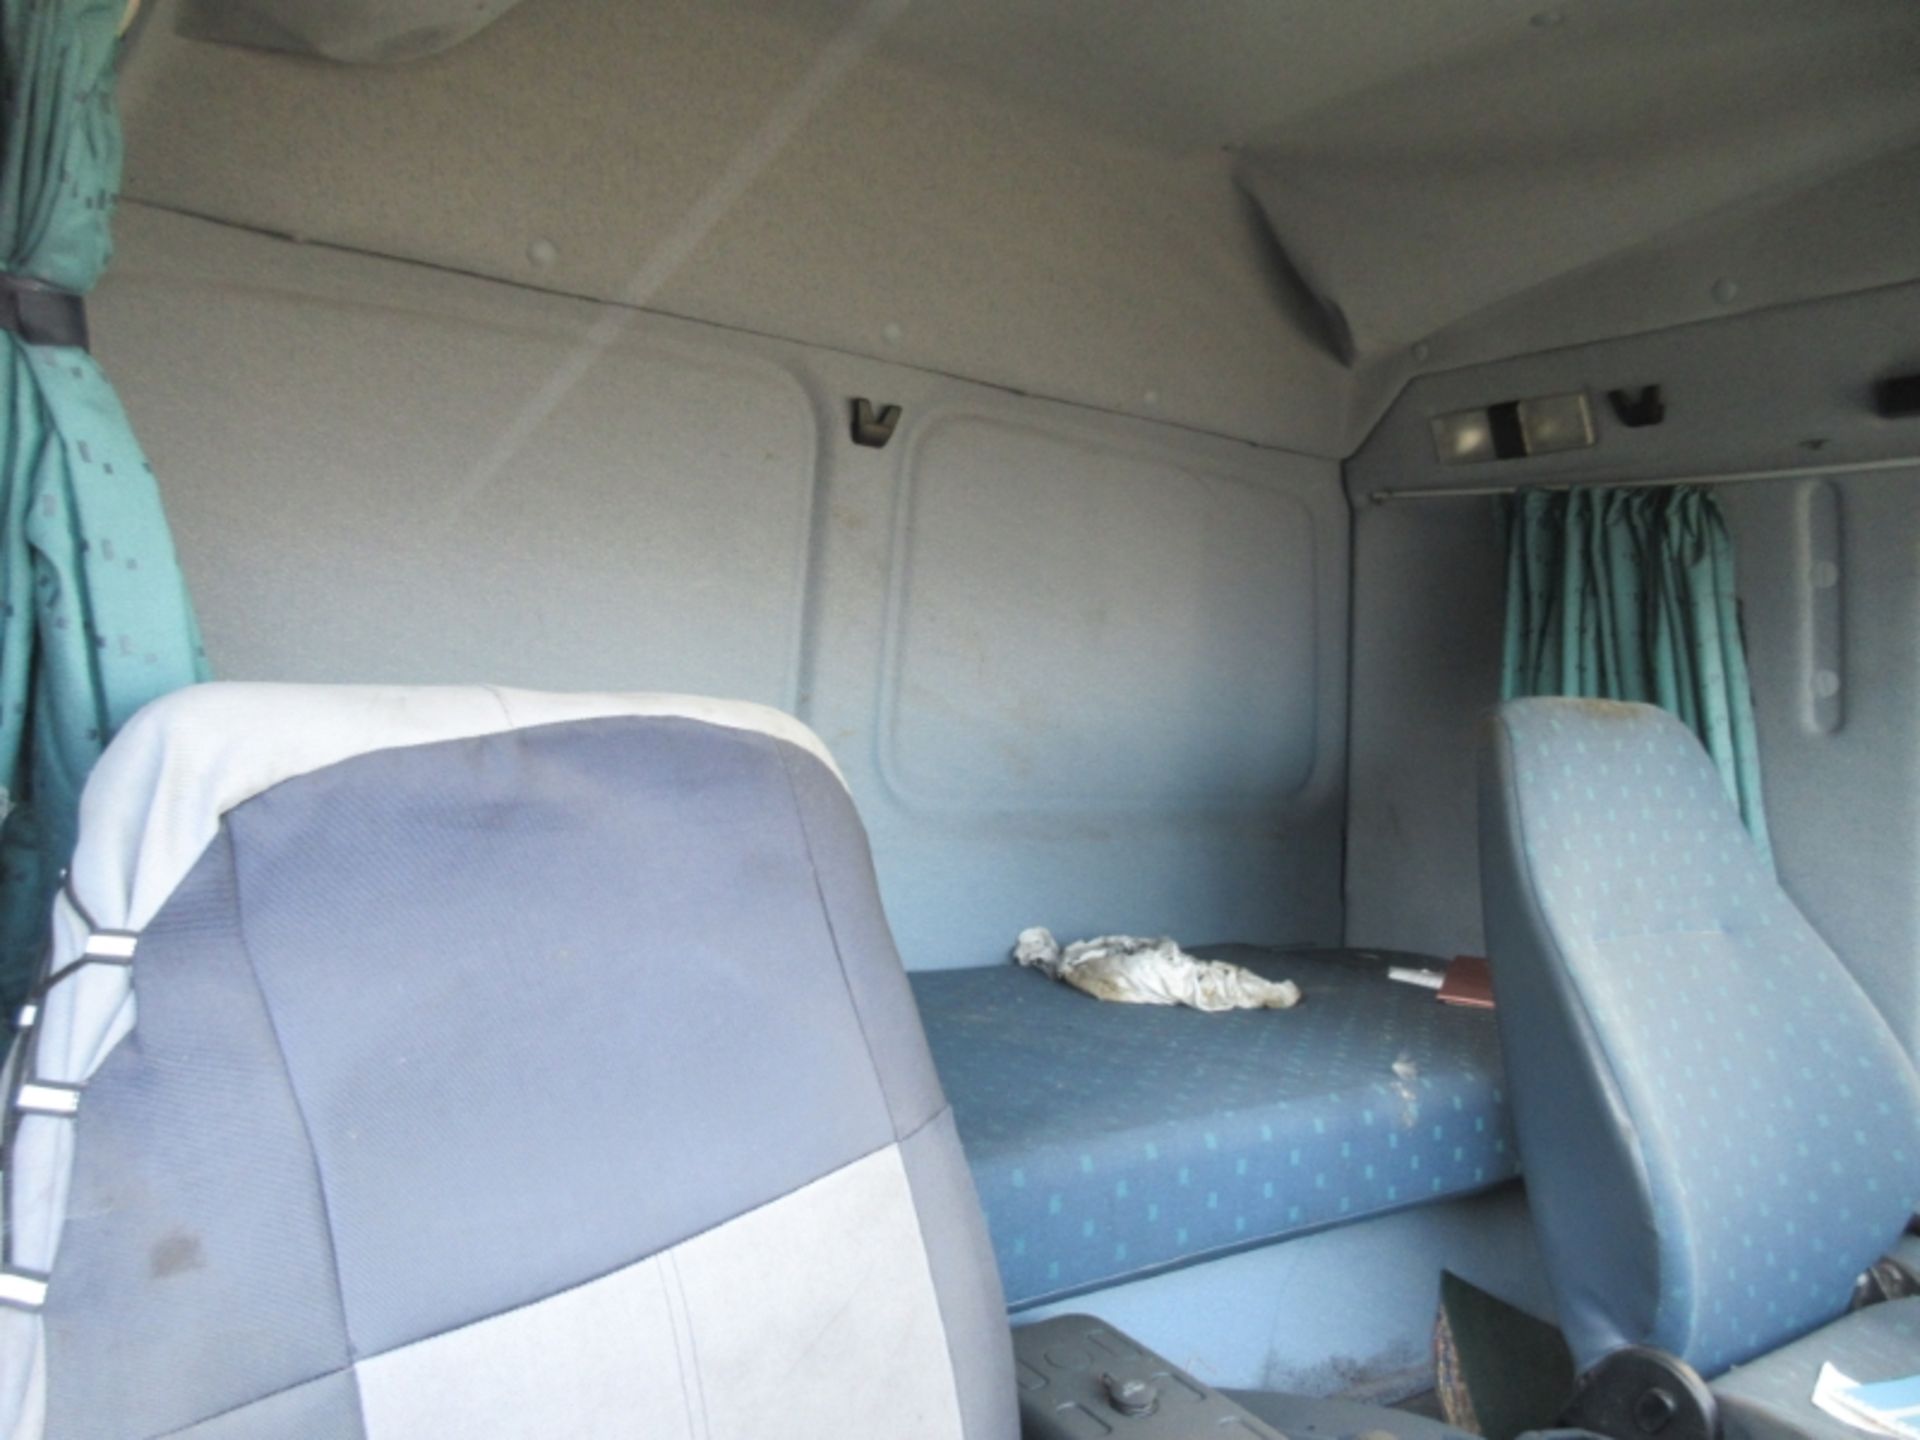 DAF 45.150 Sleeper Cab Diesel - VIN: XLRAE45CE0L215978 - Year: . - 057,000 km - 4x2 Box Van, Drop - Image 5 of 9